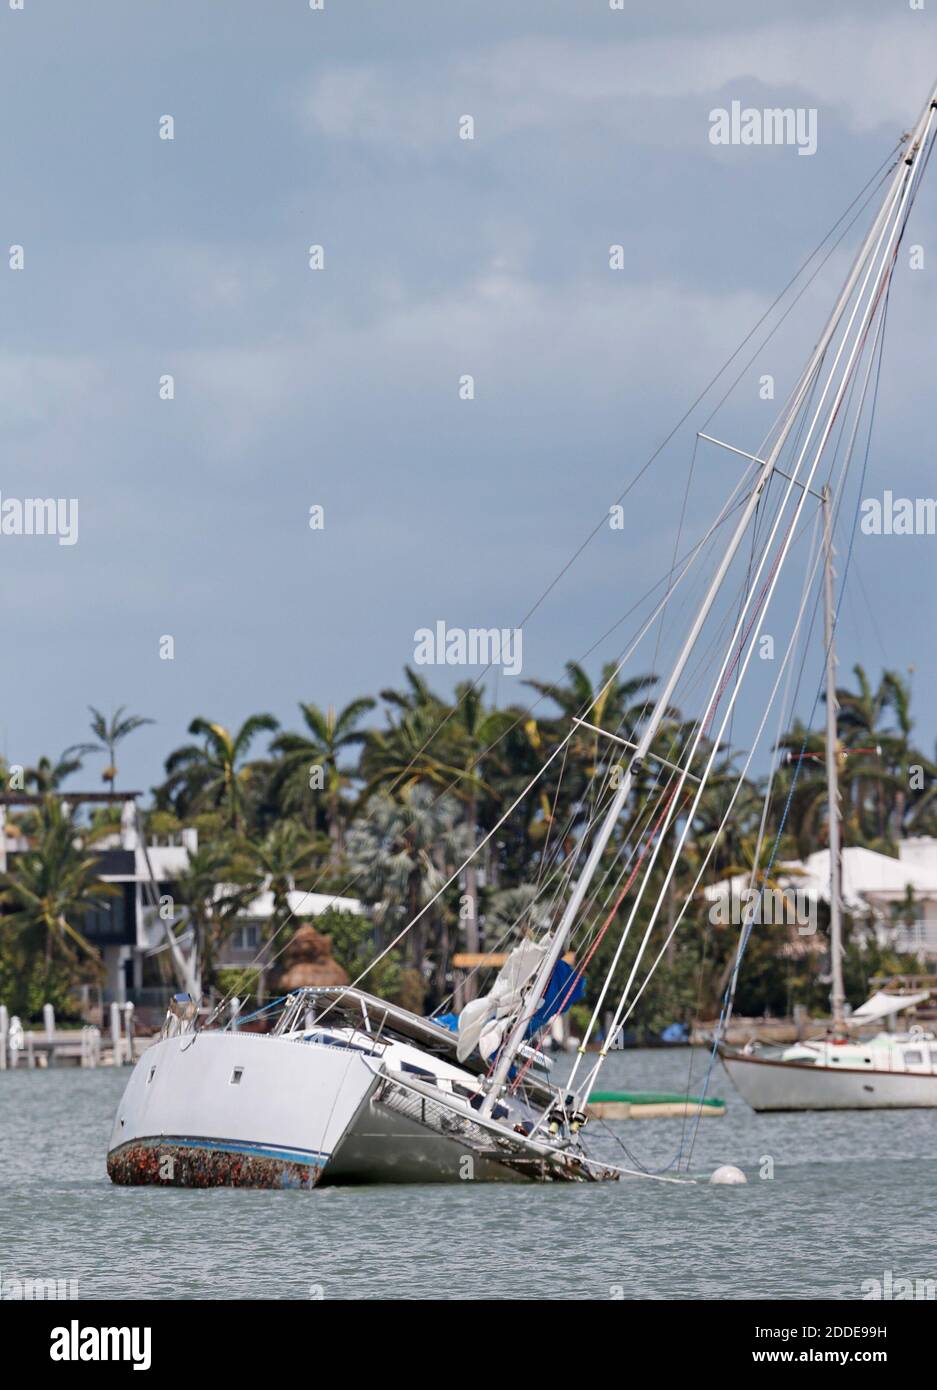 NO FILM, NO VIDEO, NO TV, NO DOCUMENTARY - A sailboat capsized at Watson Island in the Hurricane Irma aftermath on Monday, September 11, 2017 in Miami. Photo by David Santiago/Miami Herald/TNS/ABACAPRESS.COM Stock Photo